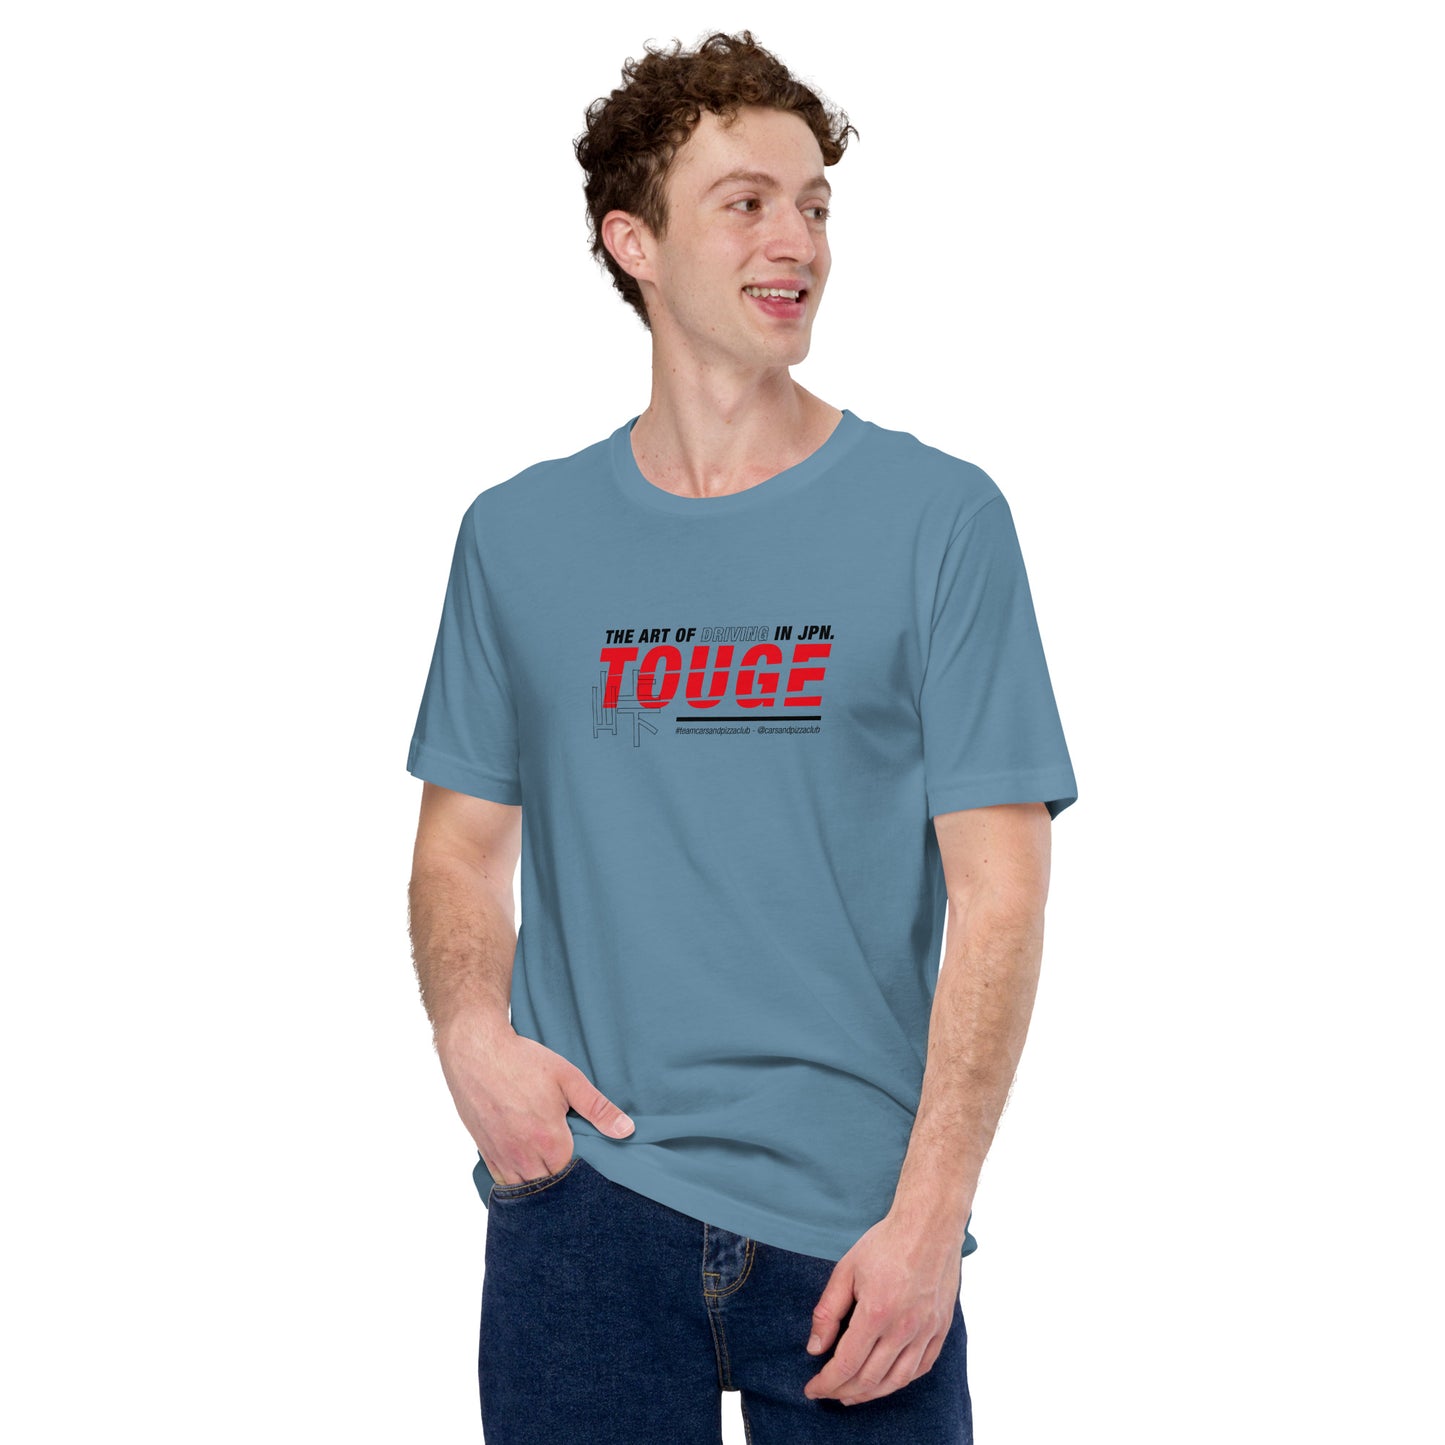 "Togue Edition" Unisex T-Shirt